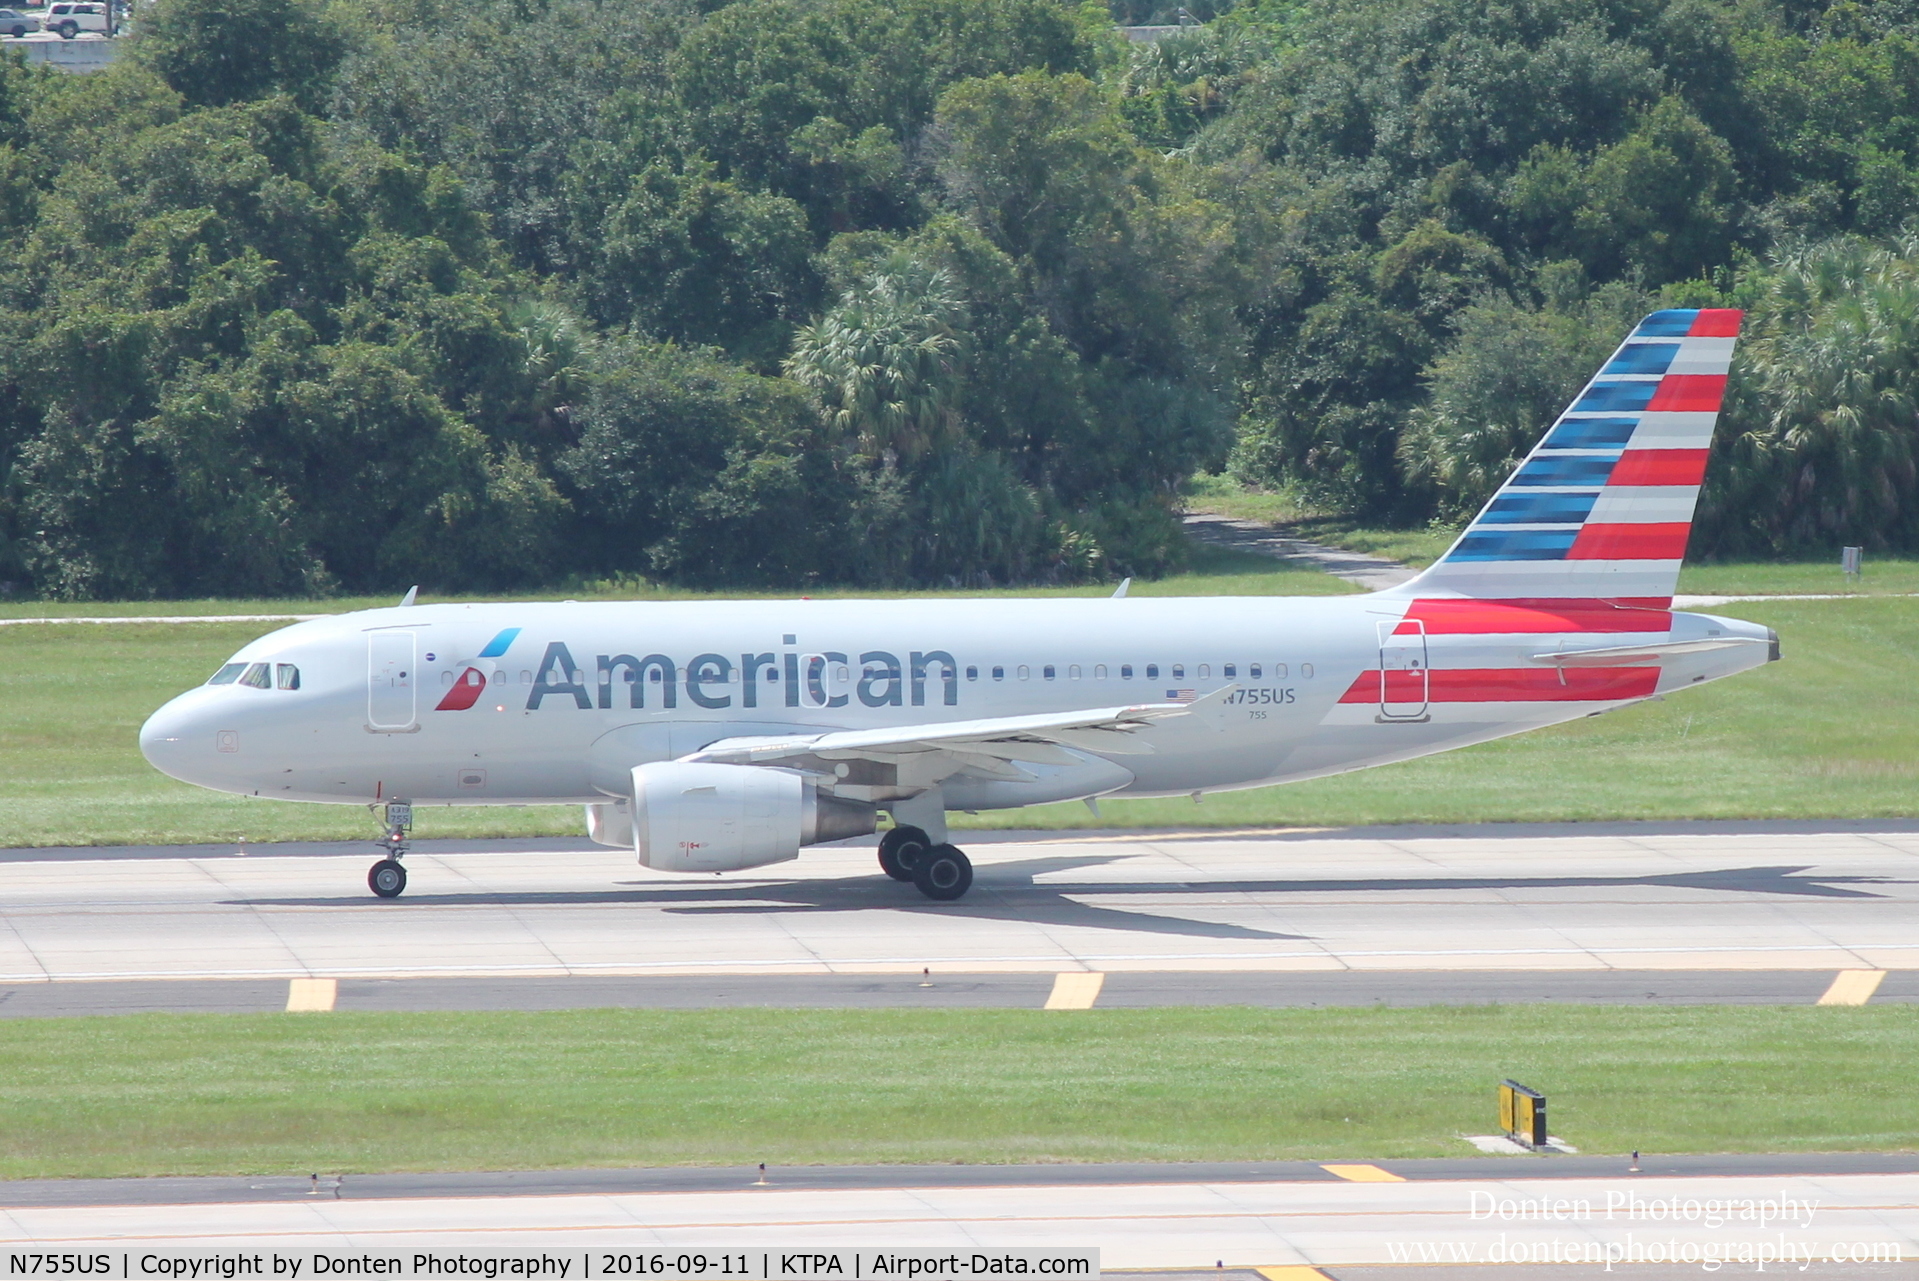 N755US, 2000 Airbus A319-112 C/N 1331, American Flight 1841 (N755US) departs Tampa International Airport enroute to Reagan National Airport